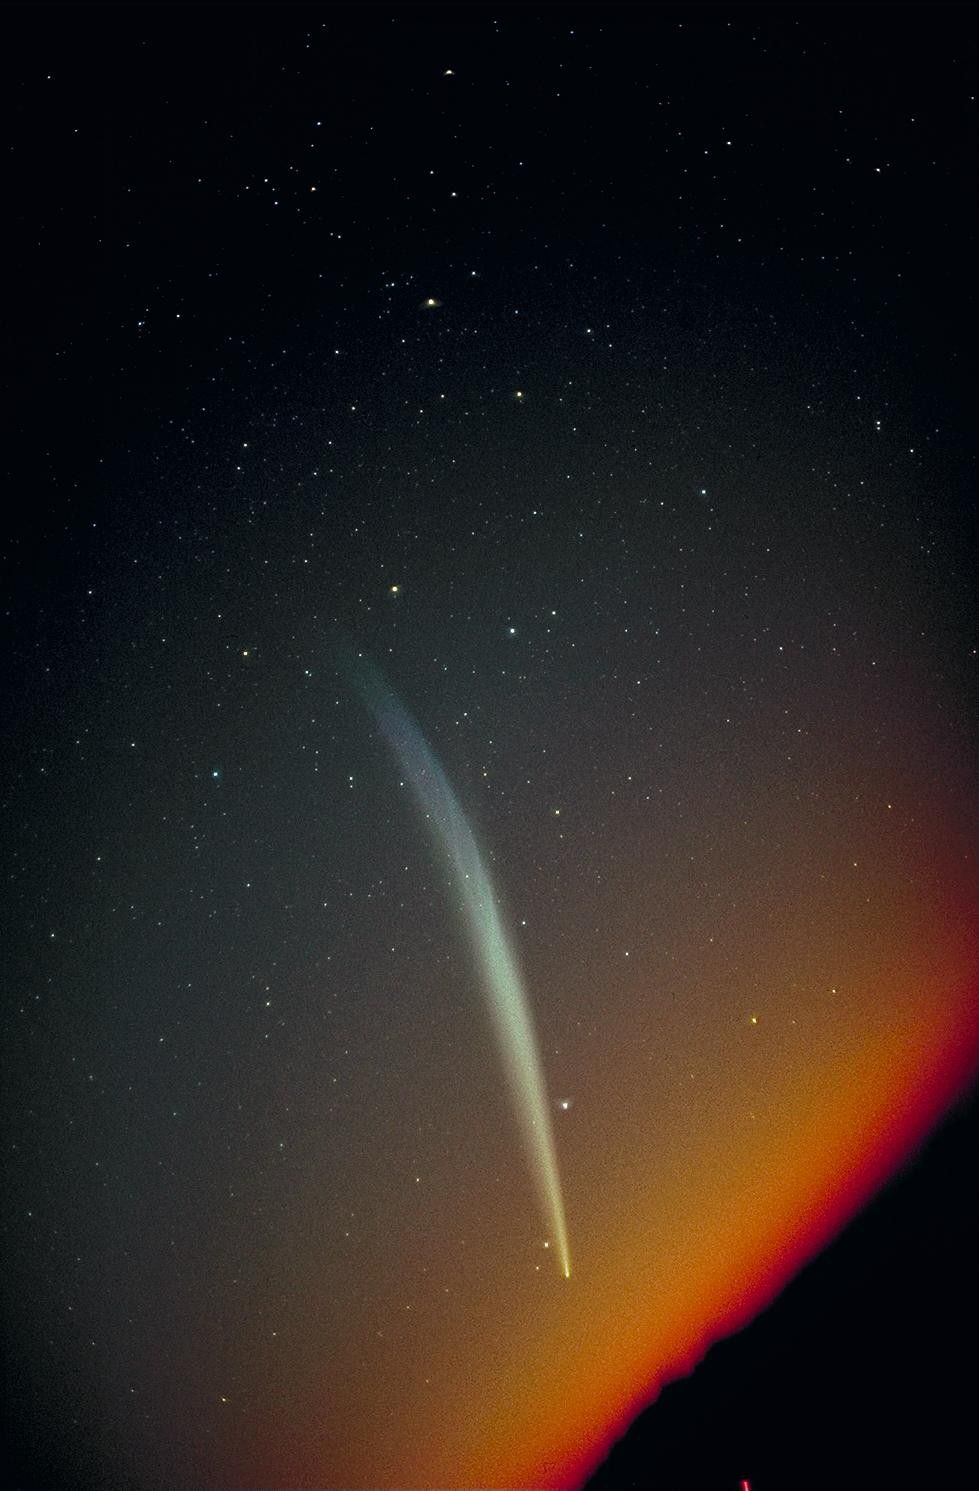 The Ikeya-Seki comet. Credit R. Lynds